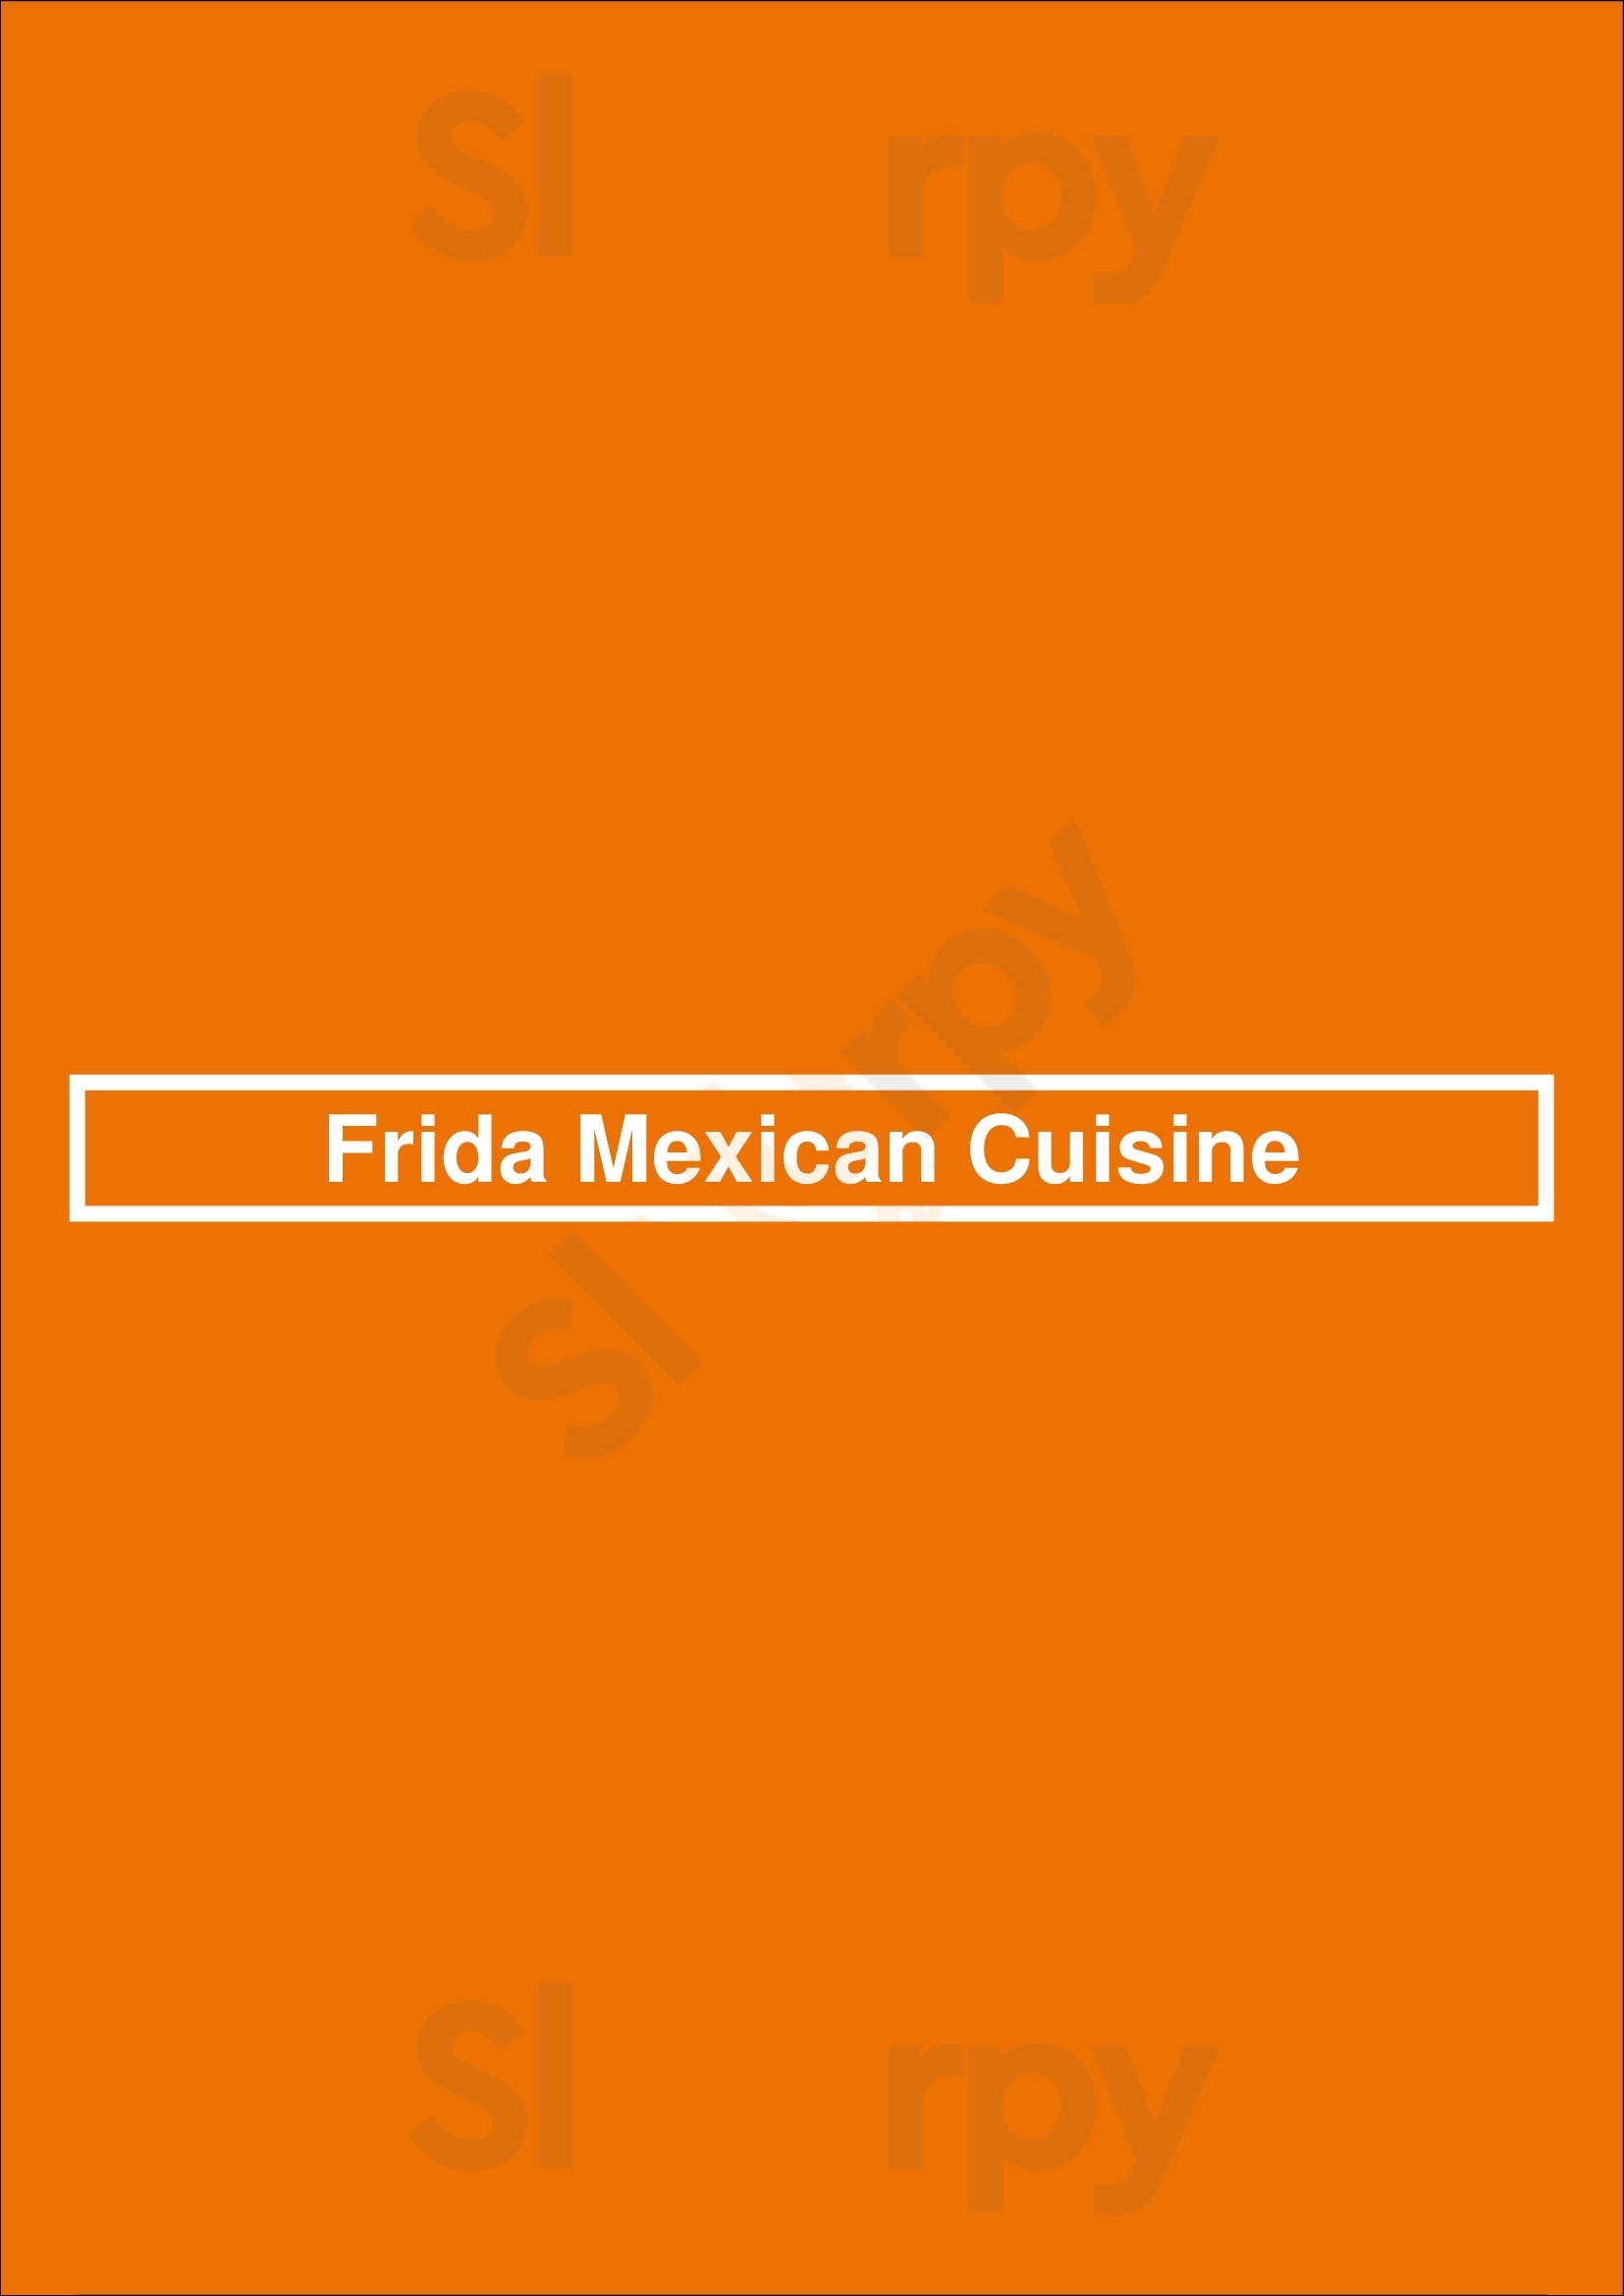 Frida Mexican Cuisine Los Angeles Menu - 1